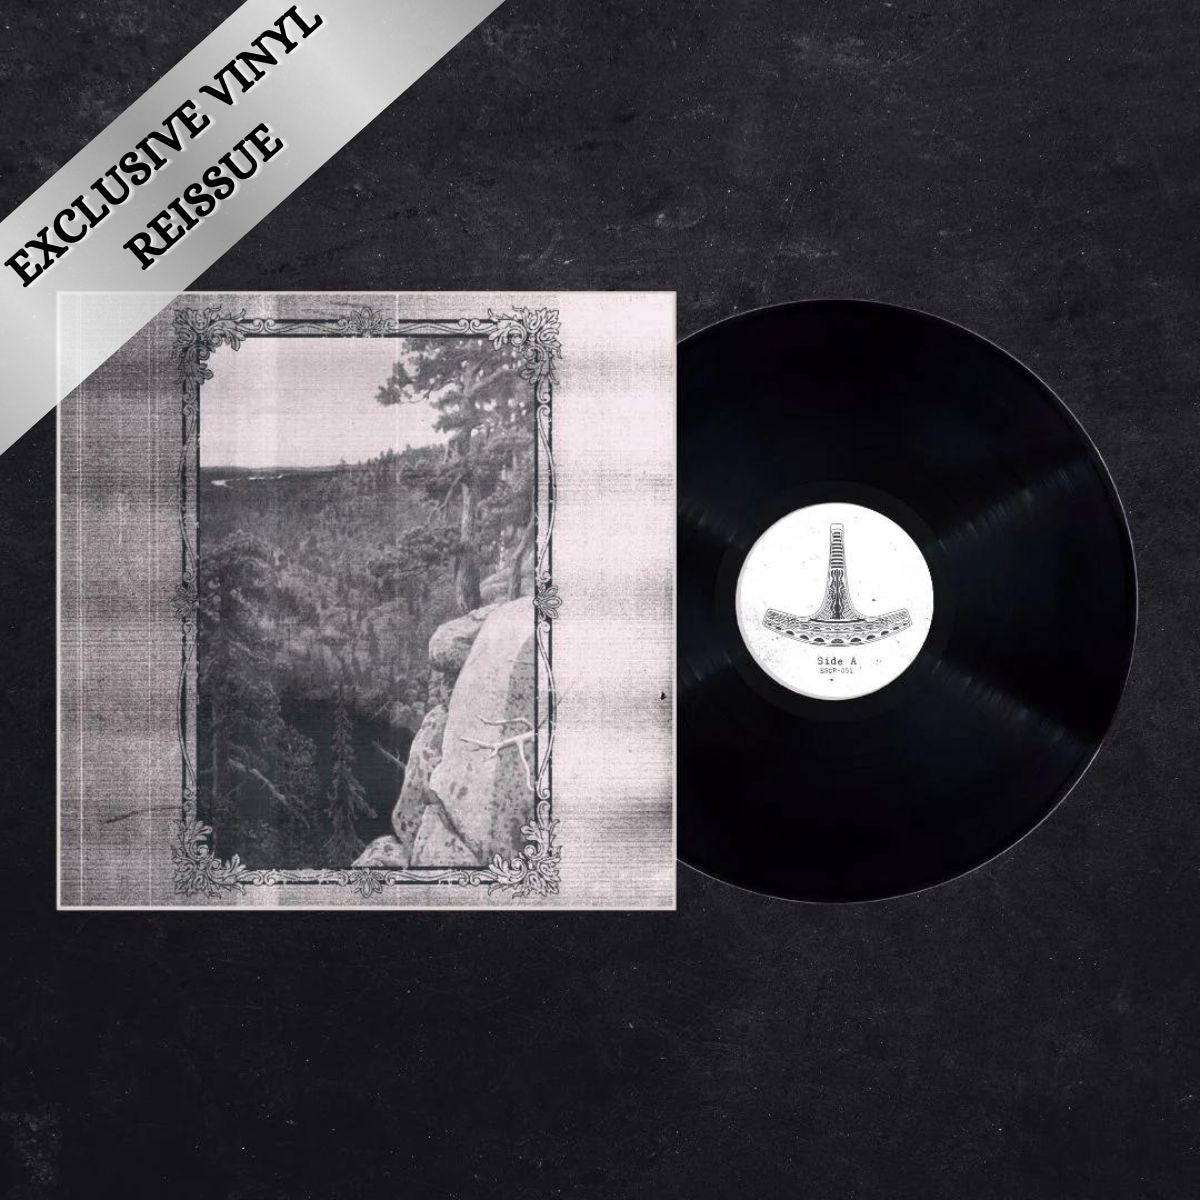 ESCR-051: Herugrim (Fin) "S/T" - 7" Vinyl